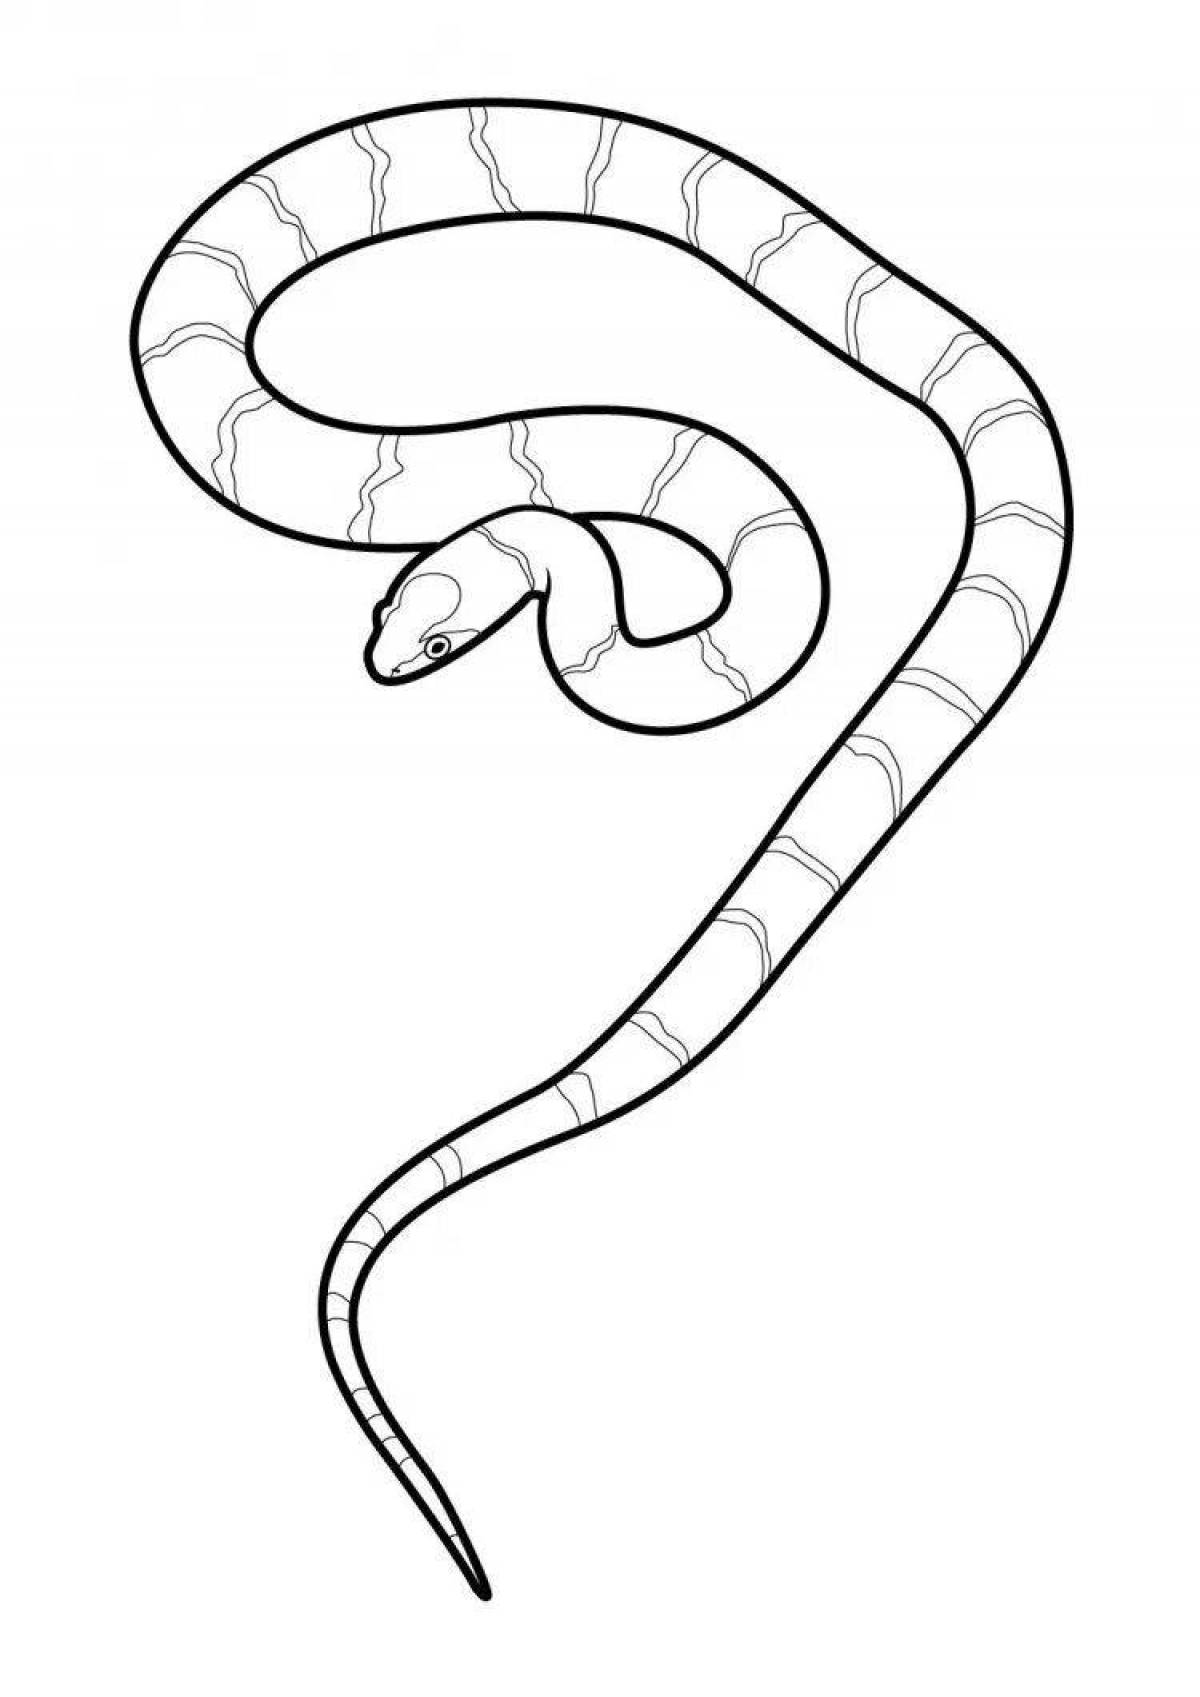 Трафарет змеи для раскрашивания